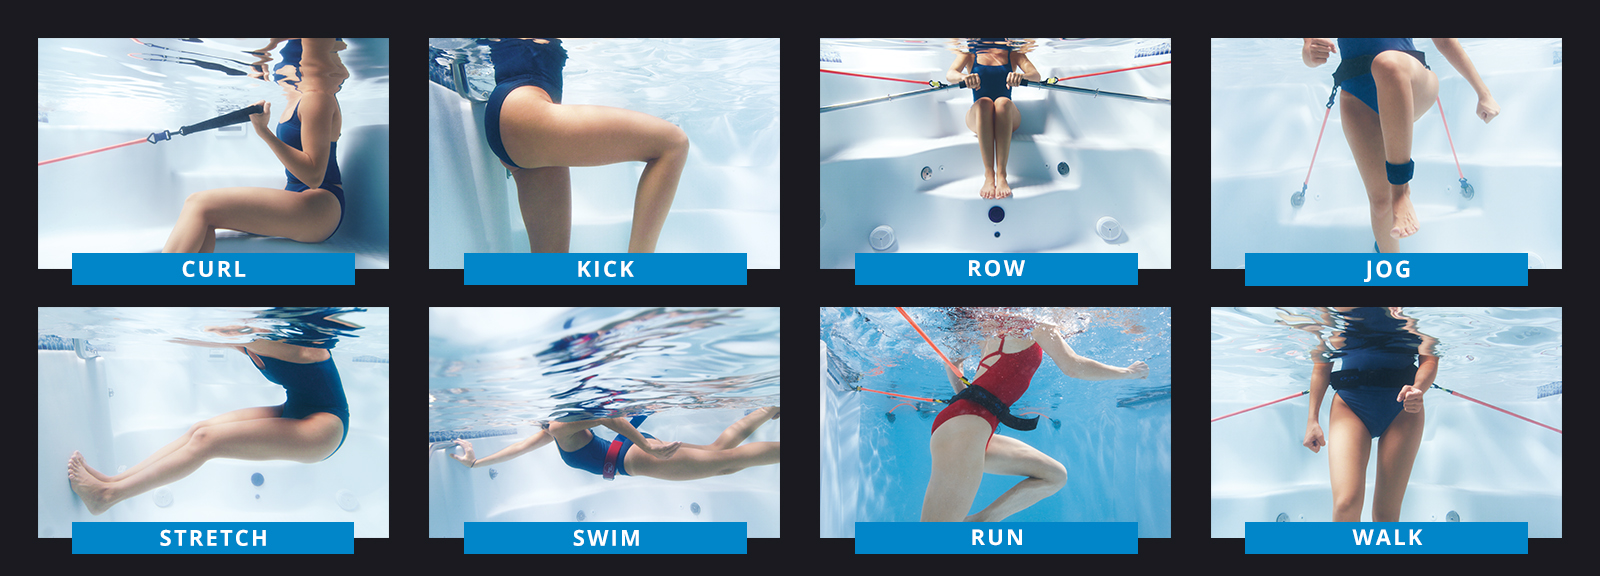 swim spa exercises with exercise equipment